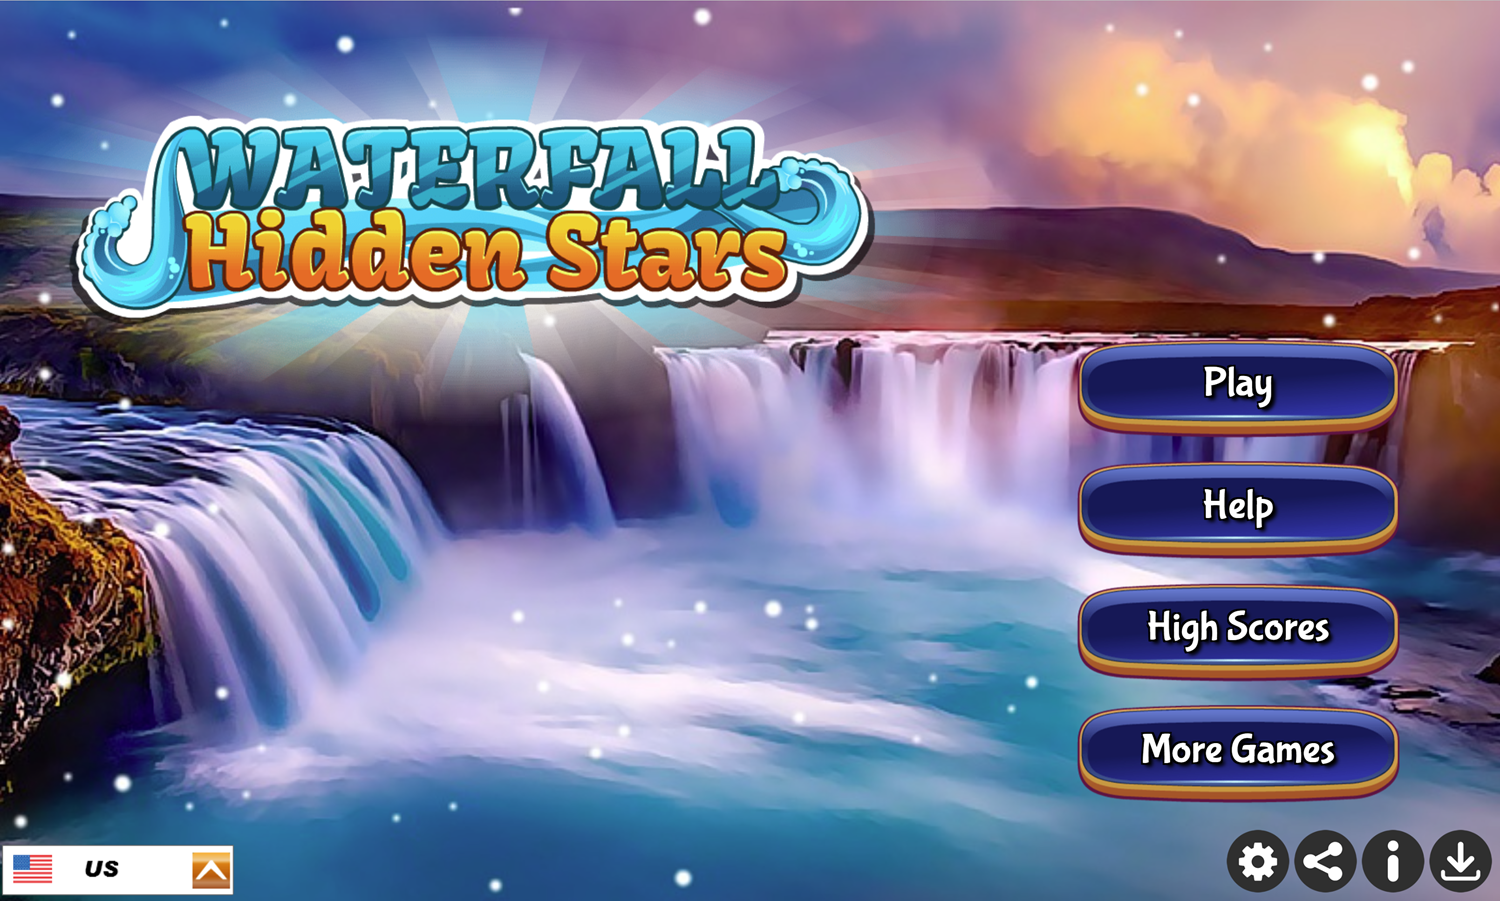 Waterfall Hidden Stars Game Welcome Screen Screenshot.